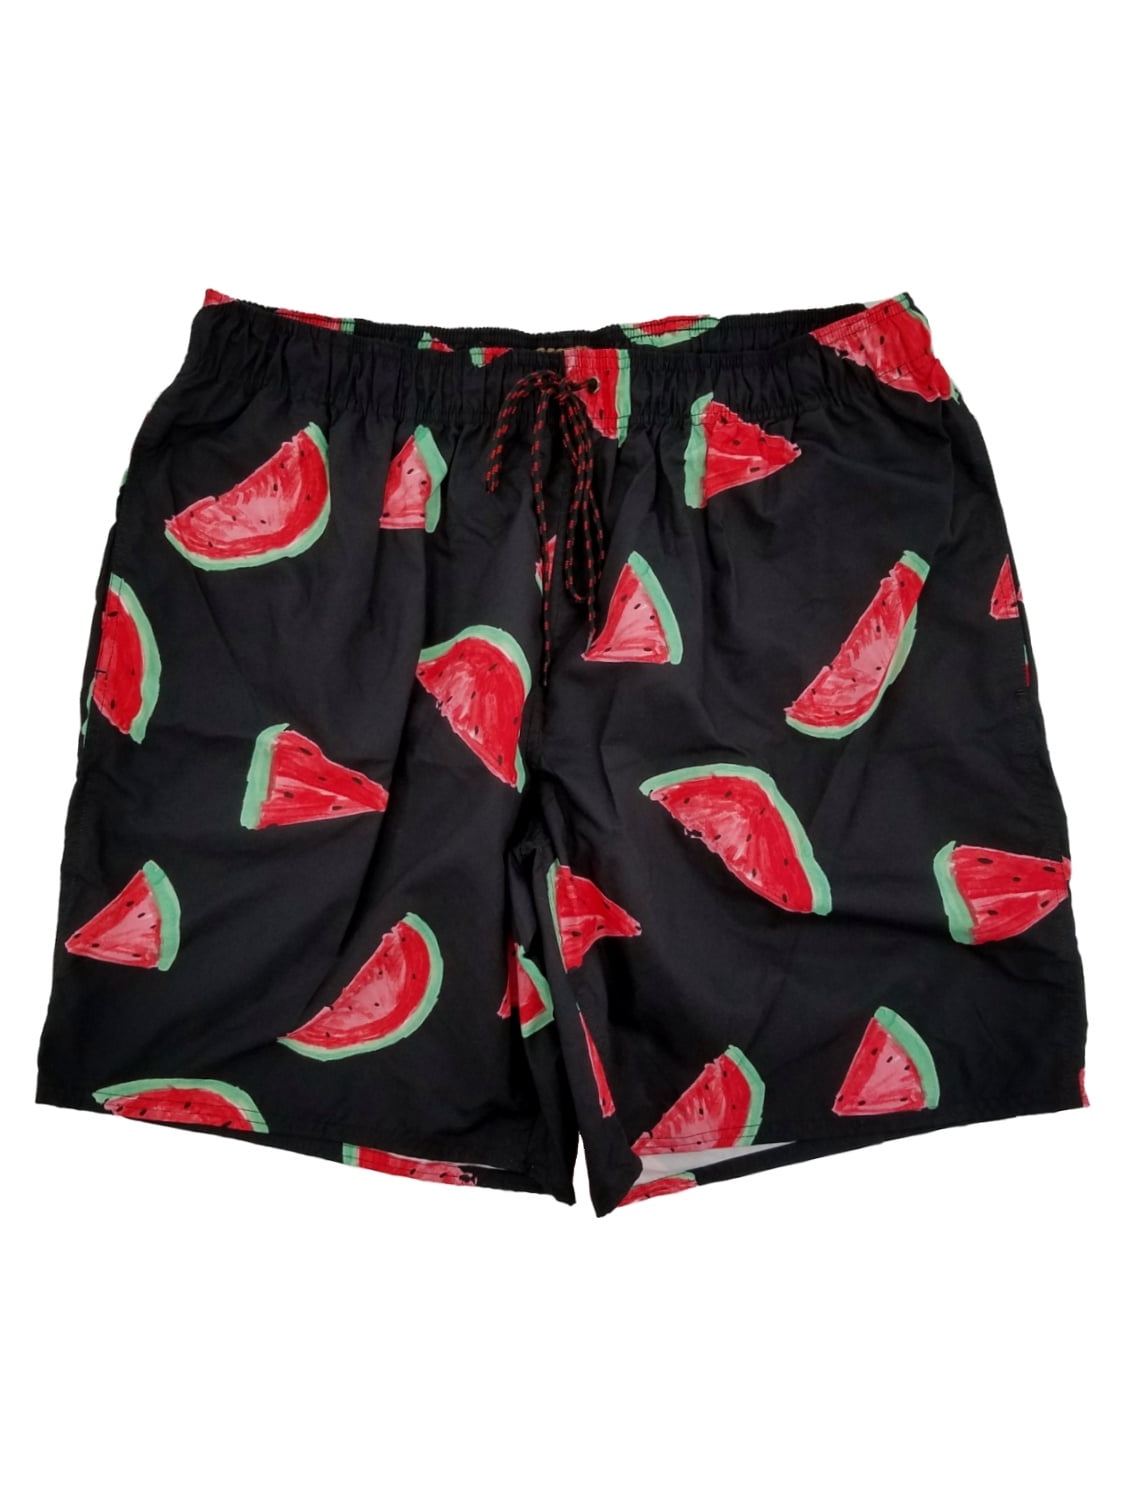 Watermelons Bananas Womens Summer Beach Shorts Boardshort Swimming Trunks Linen 